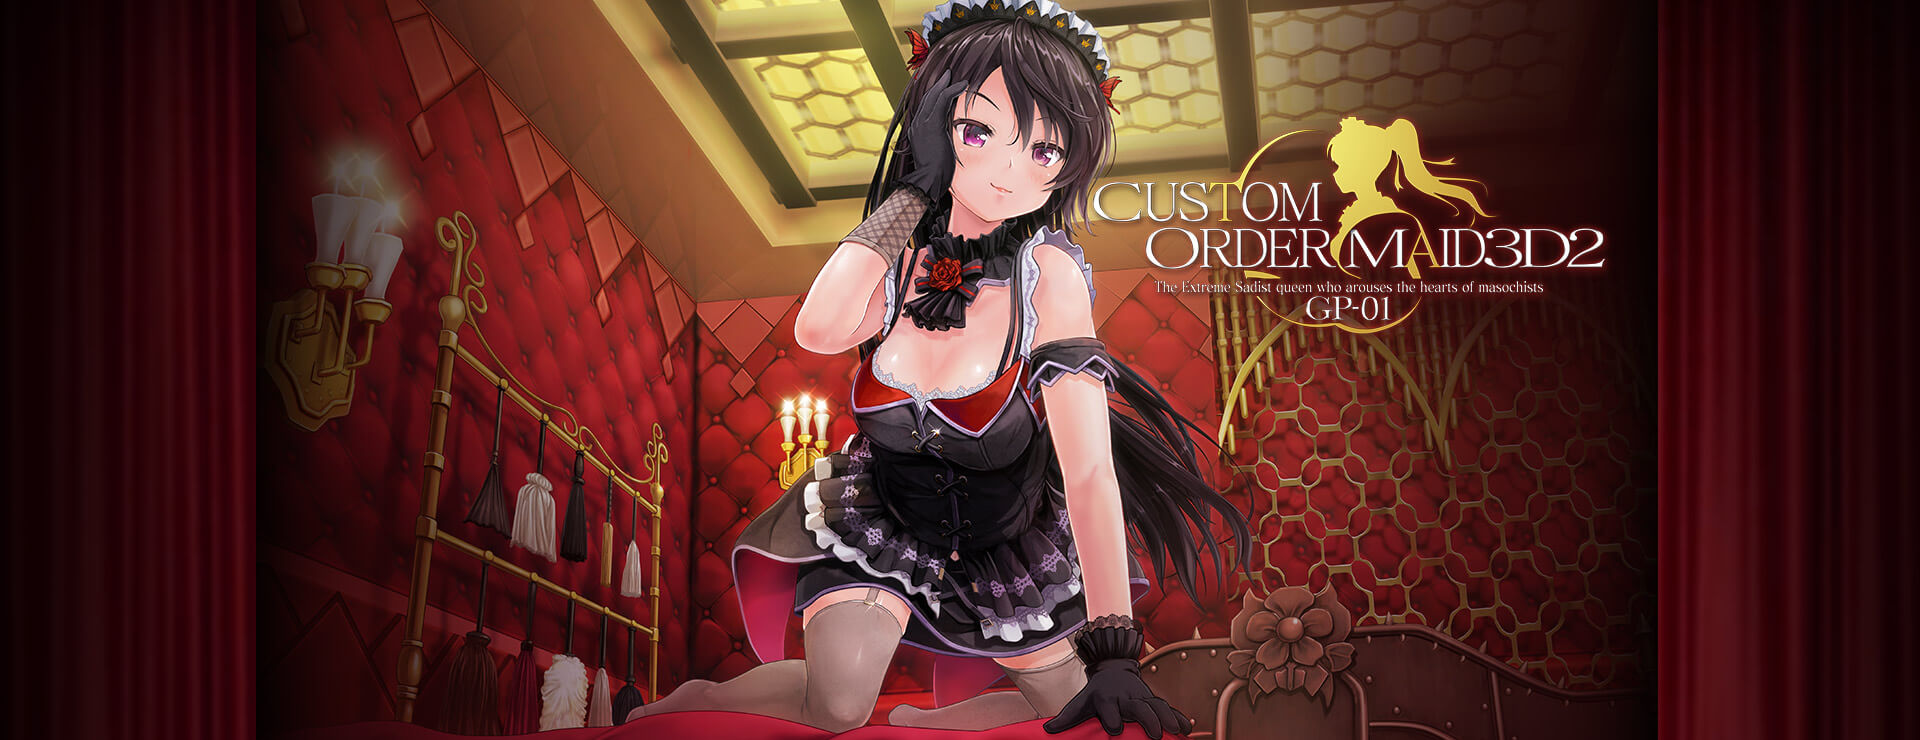 Custom Order Maid 3D2: Extreme Sadist Queen GP01 DLC - Simulation Jeu